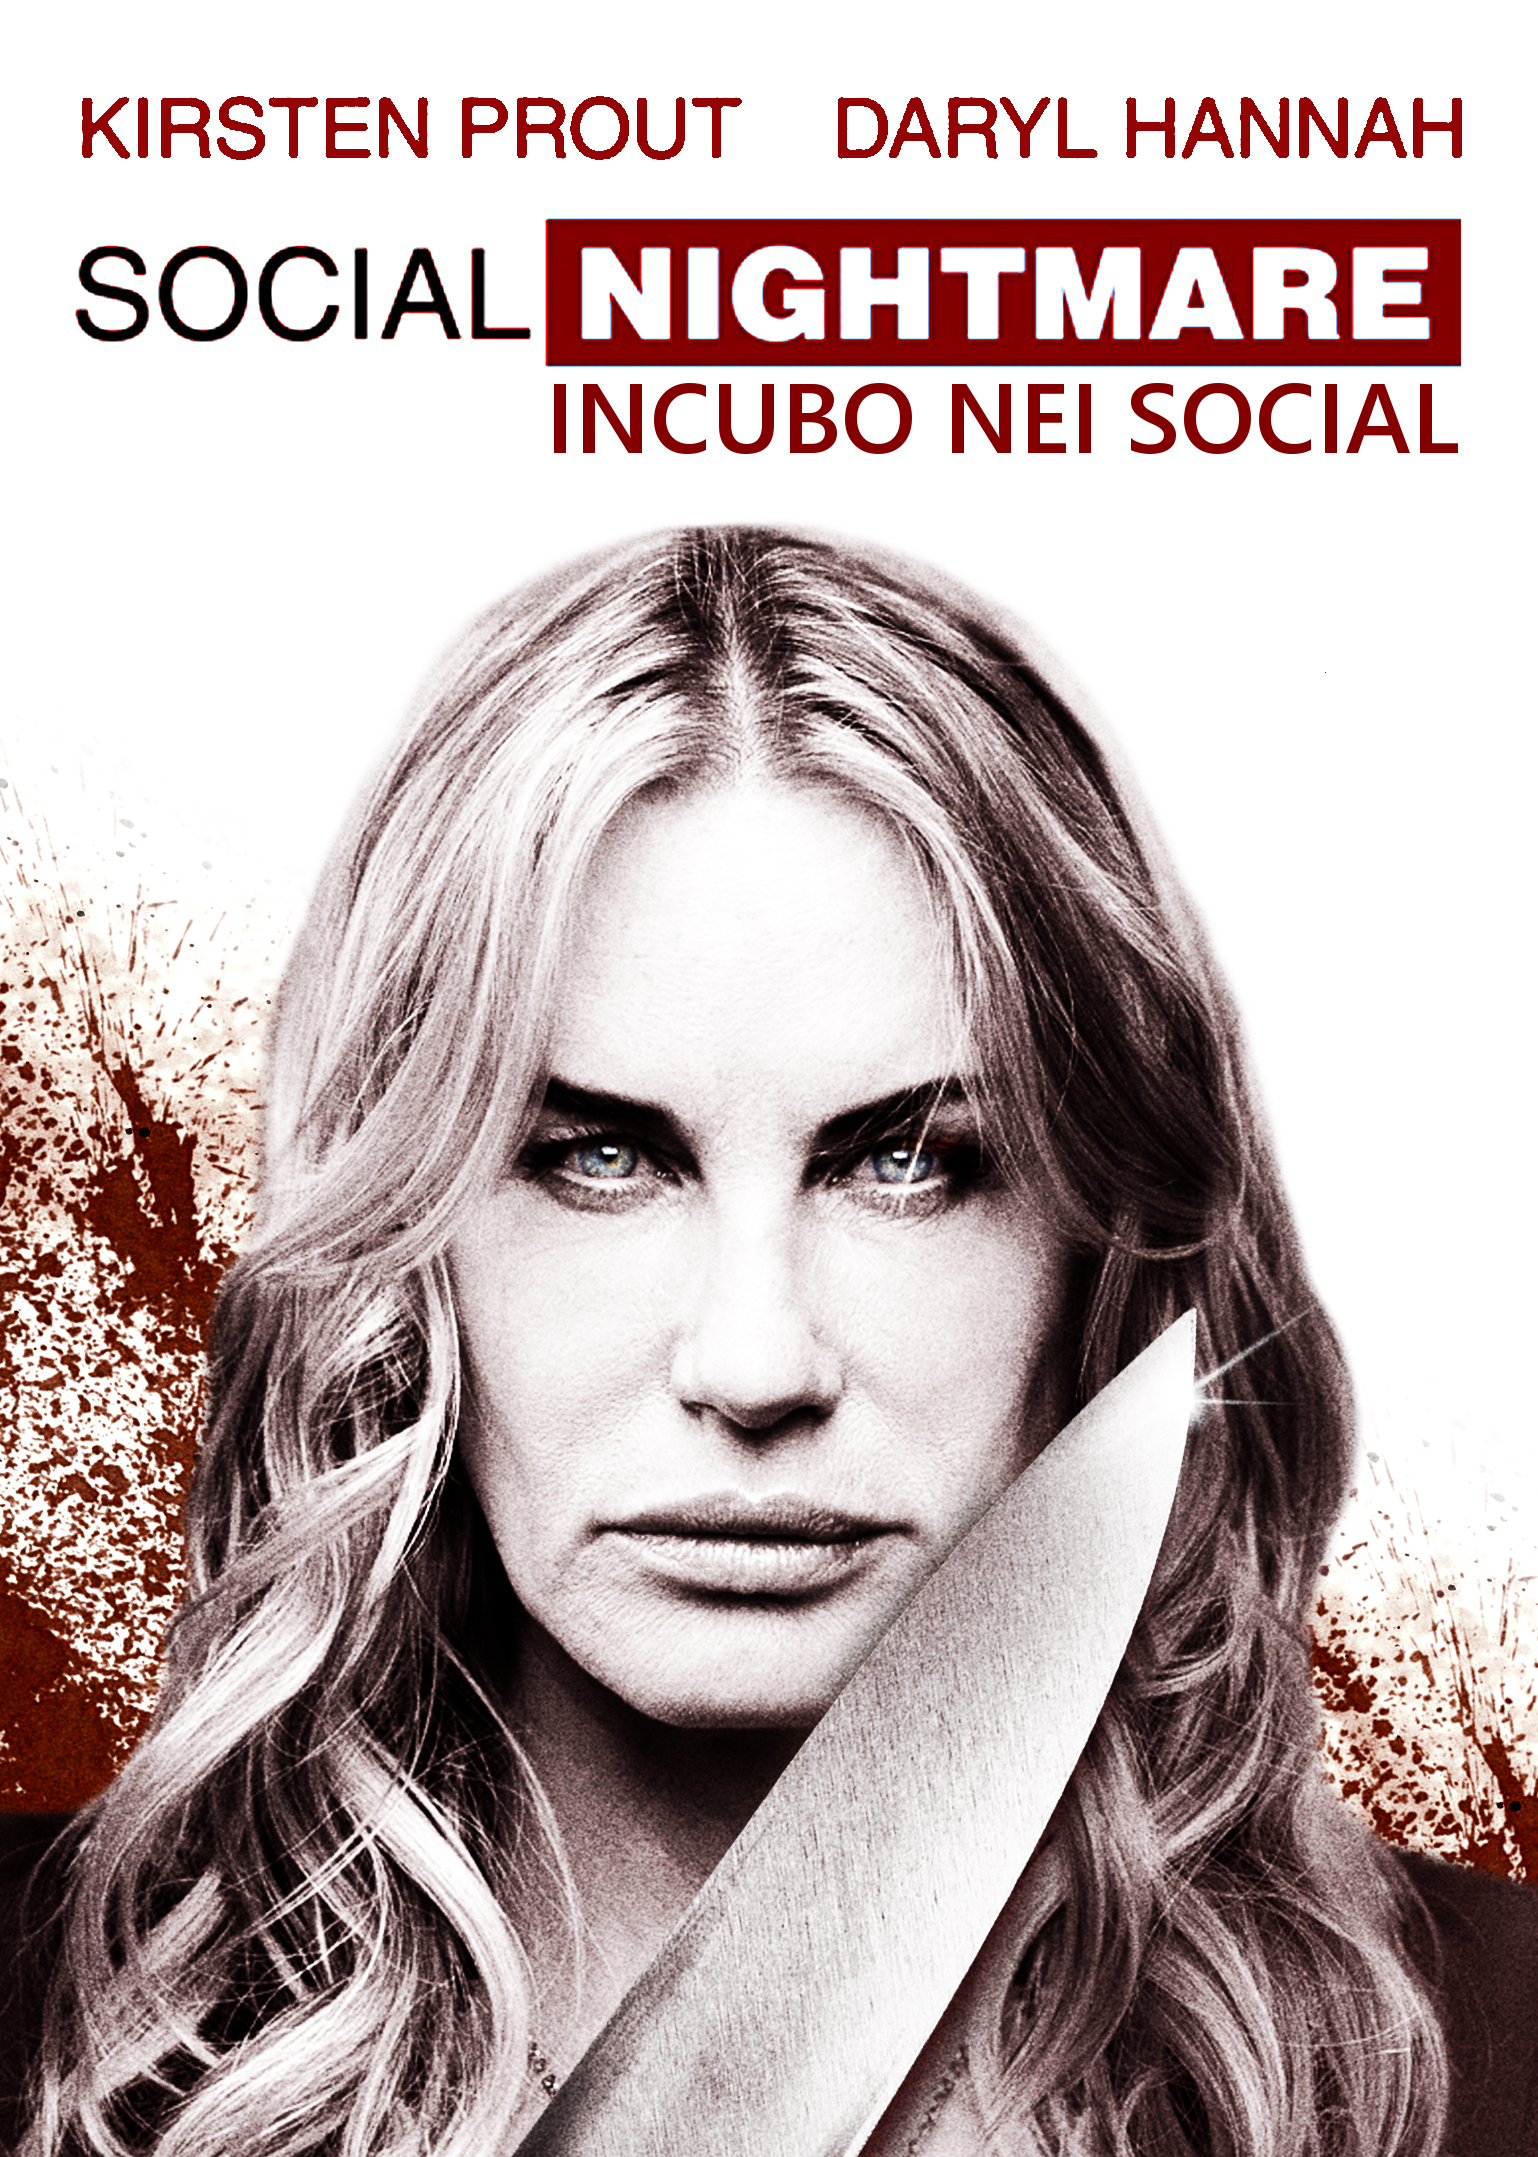 Social Nightmare – Incubo nei social [HD] (2013)